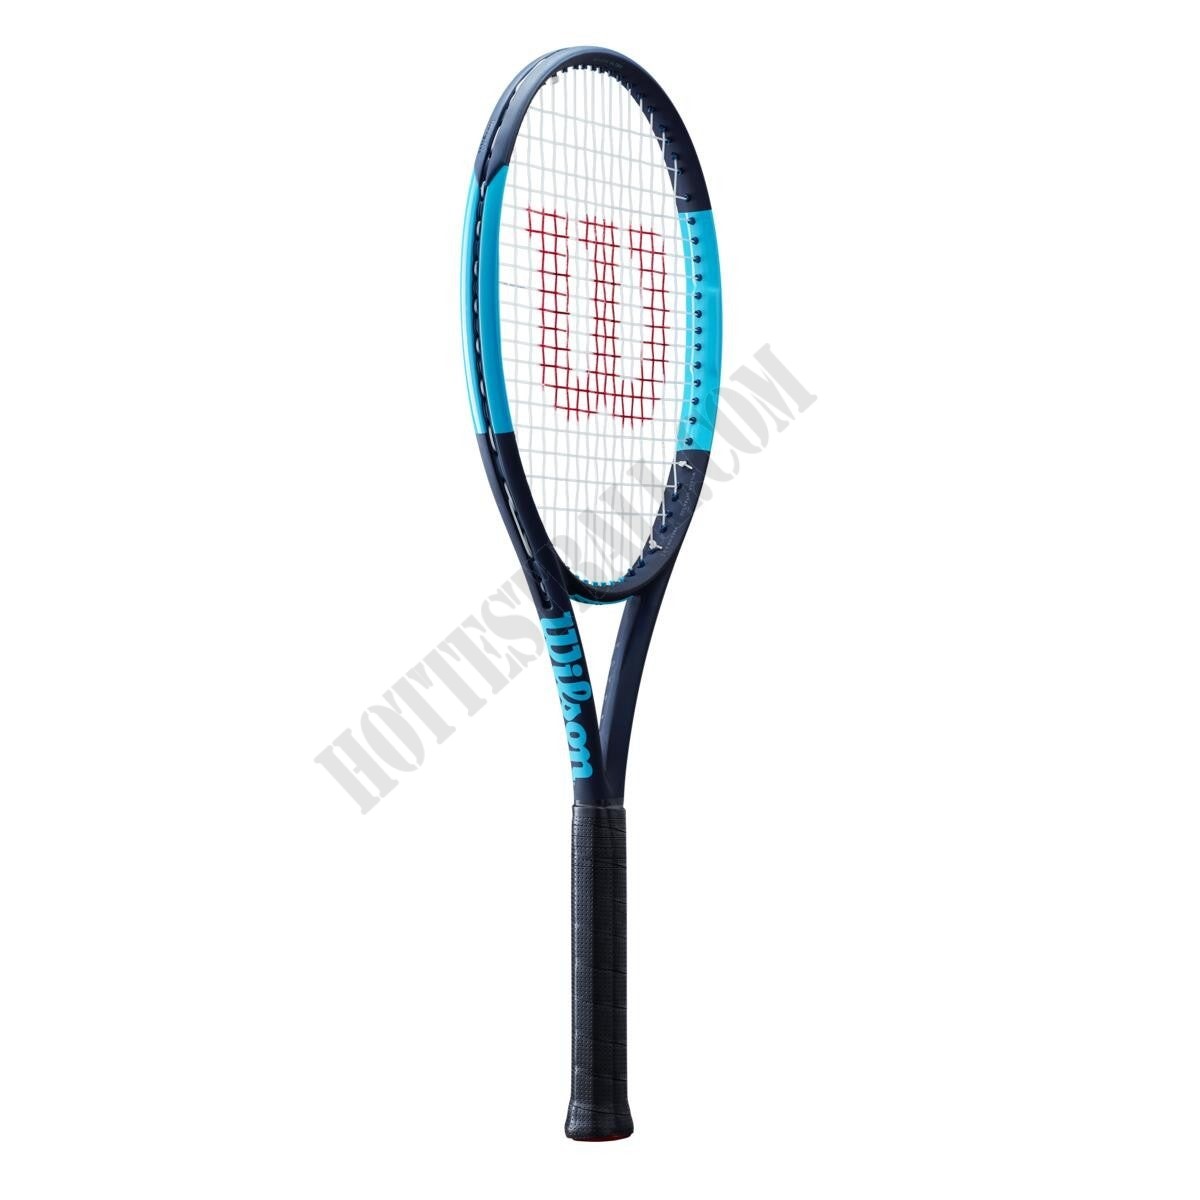 Ultra 100 v2 Tennis Racket - Wilson Discount Store - Ultra 100 v2 Tennis Racket - Wilson Discount Store